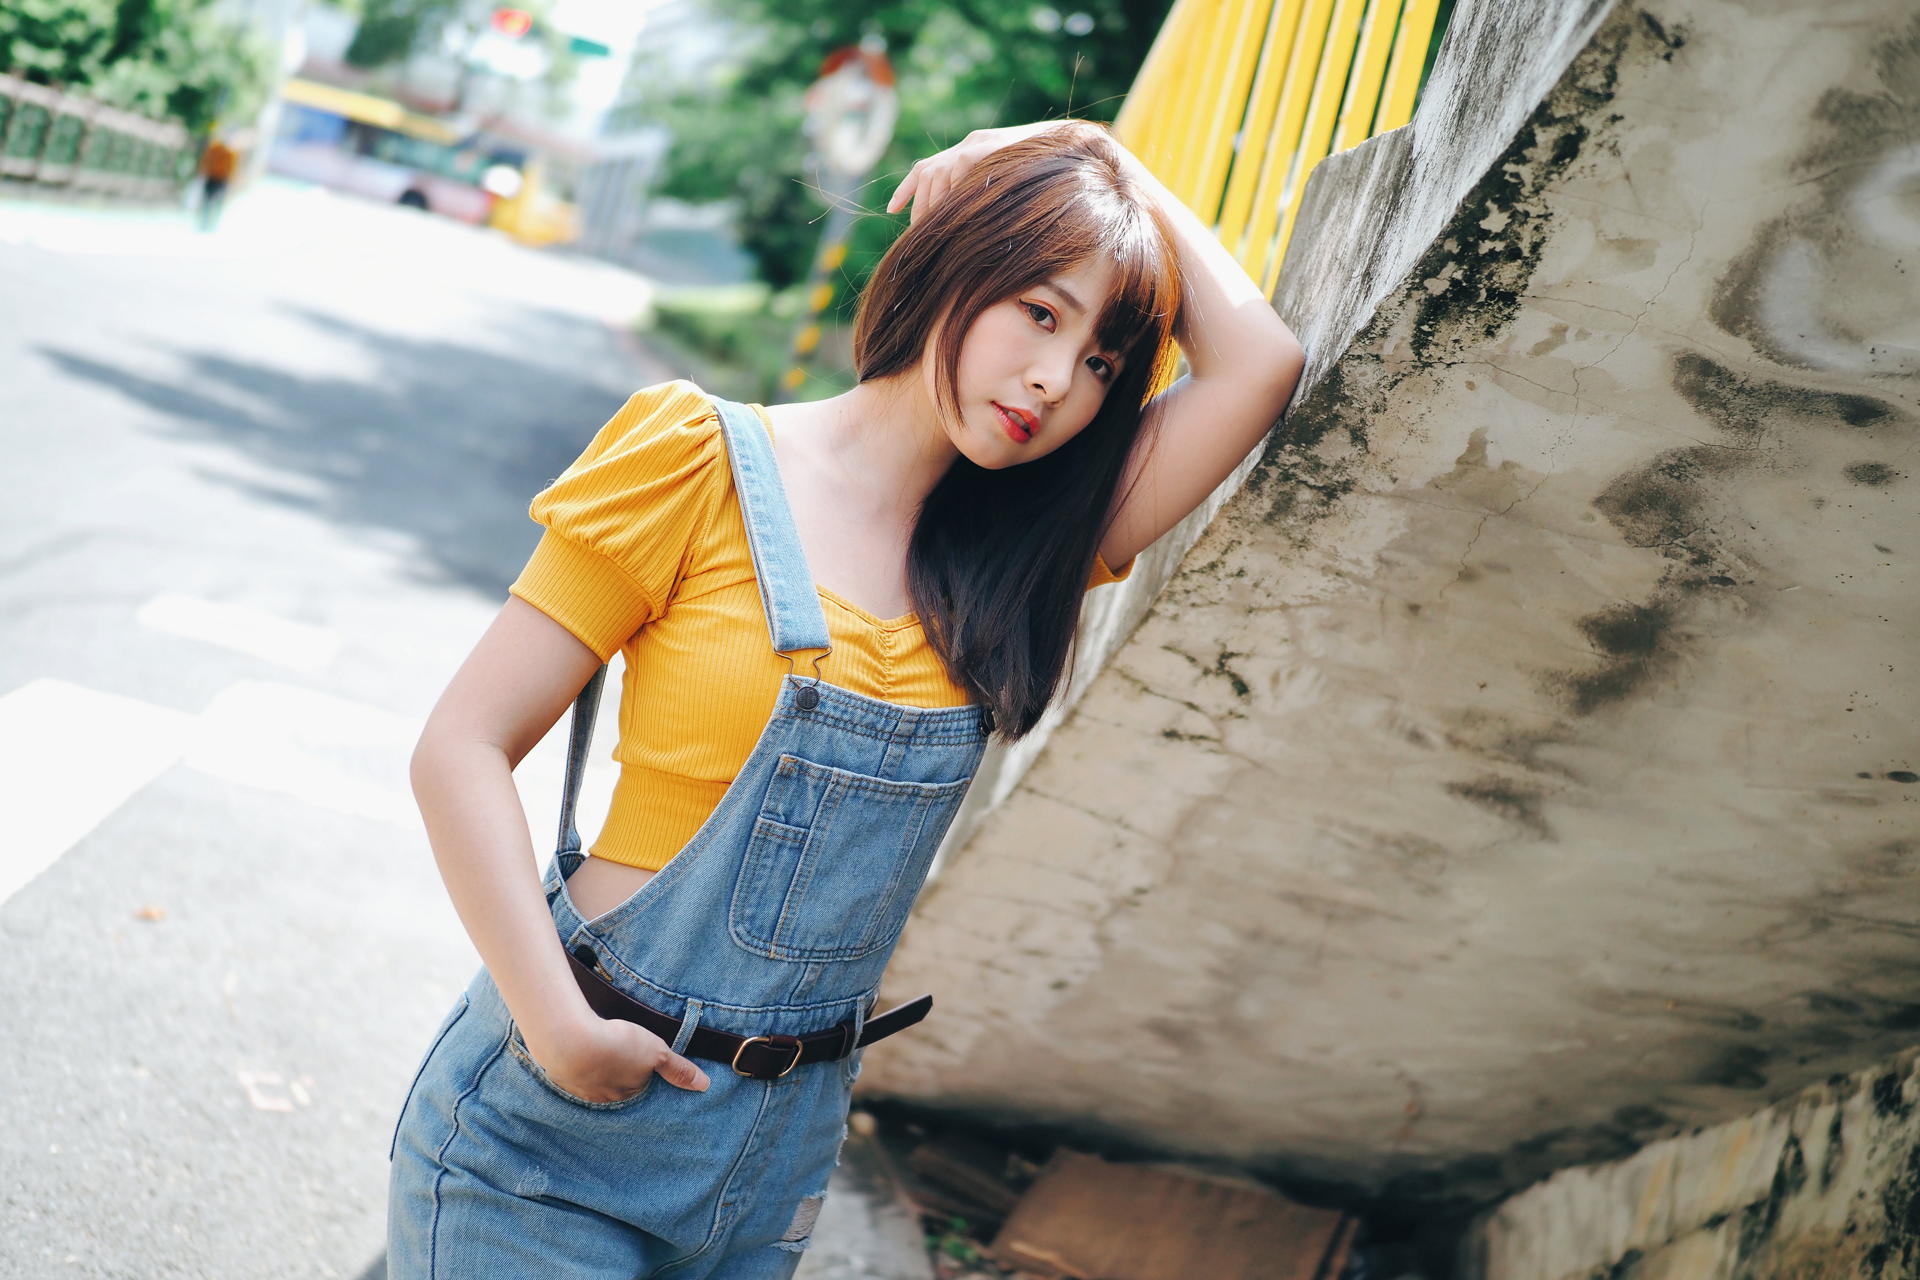 People 1920x1280 Asian model women long hair dark hair depth of field jeans dresses yellow shirt belt stairs street trees bushes leaning railing